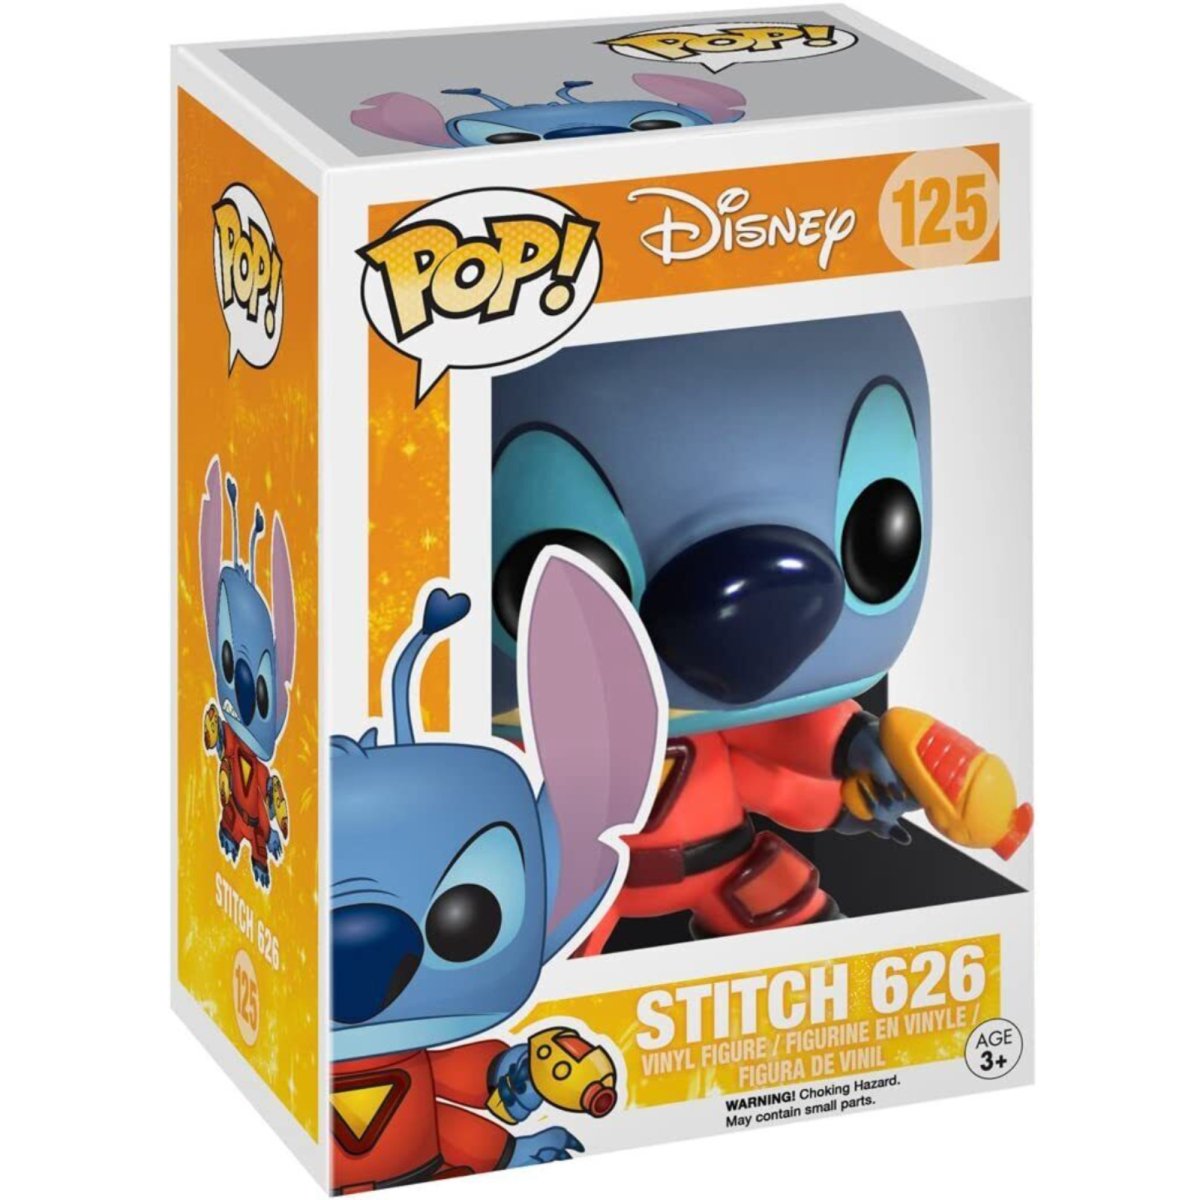 Comprar Funko POP Stitch with Turtle 1353 Disney Lilo & Stitch Special  Edition